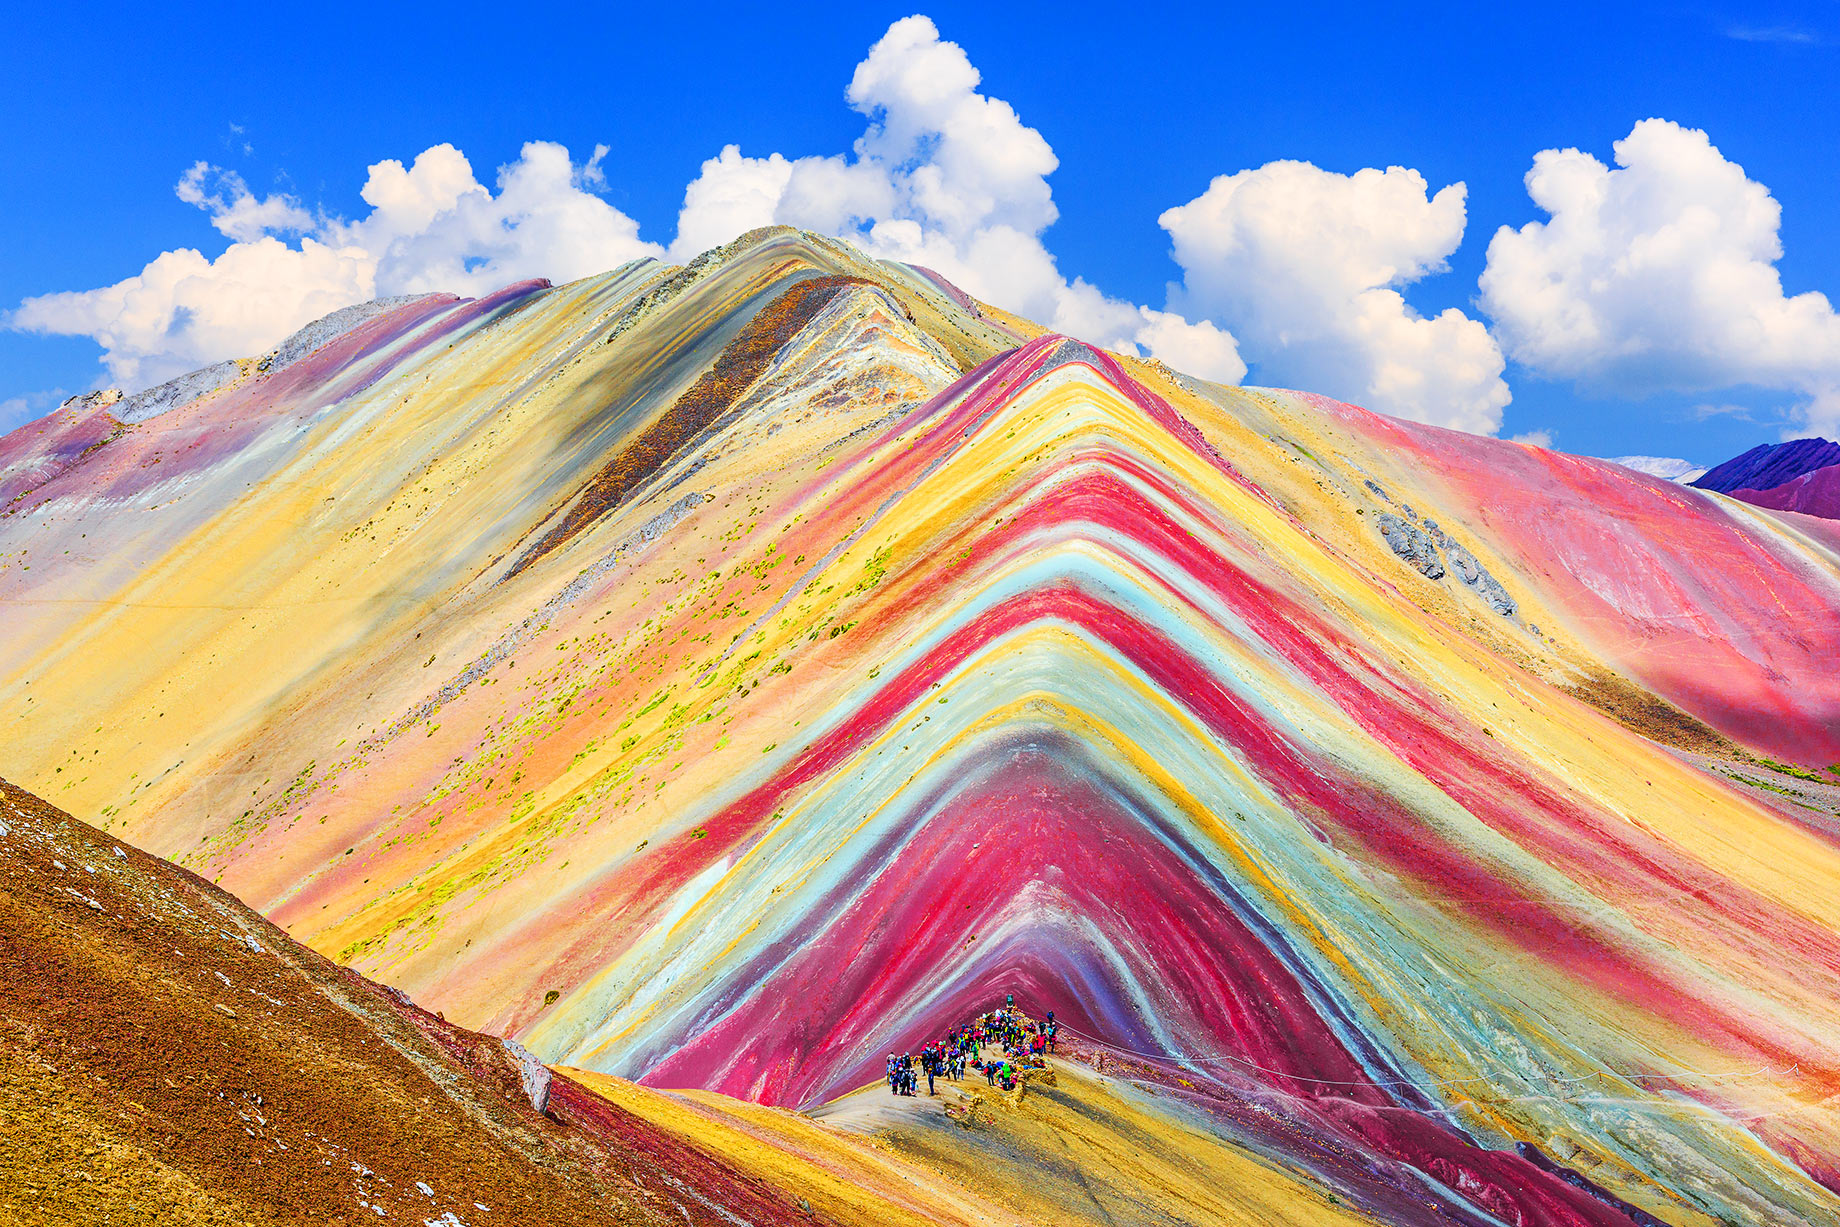 Vinicunca, Cusco Region, Peru - Montana de Siete Colores, or Rainbow Mountain